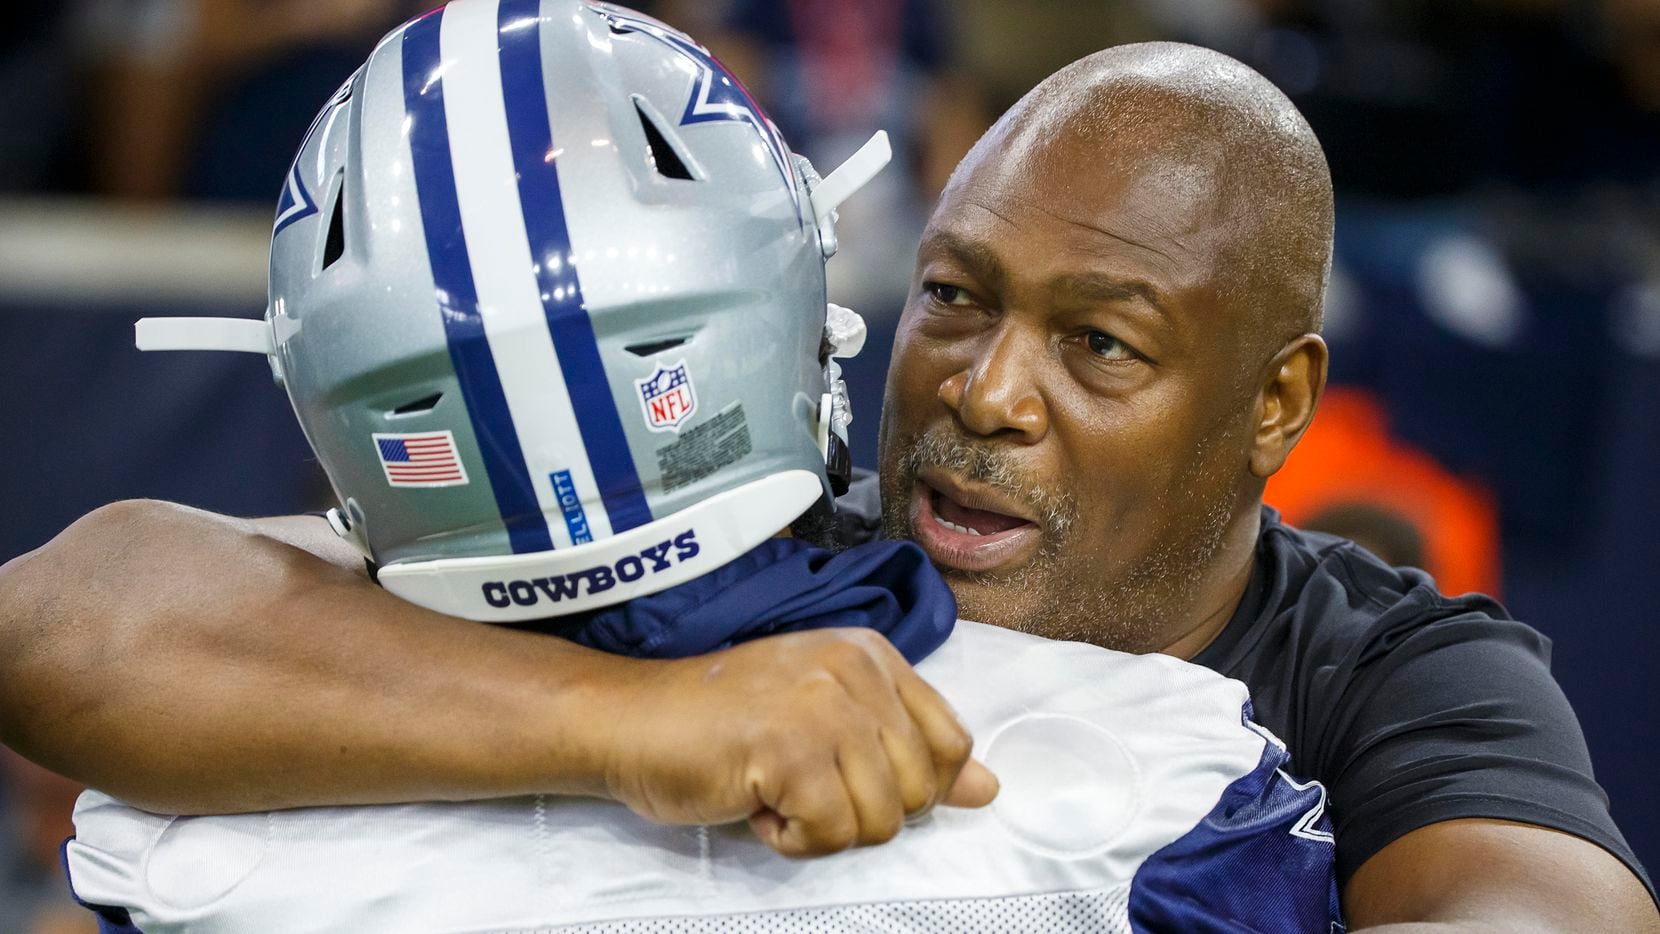 Former Cowboy Charles Haley hugs Dallas Cowboys running back Ezekiel Elliott during the...